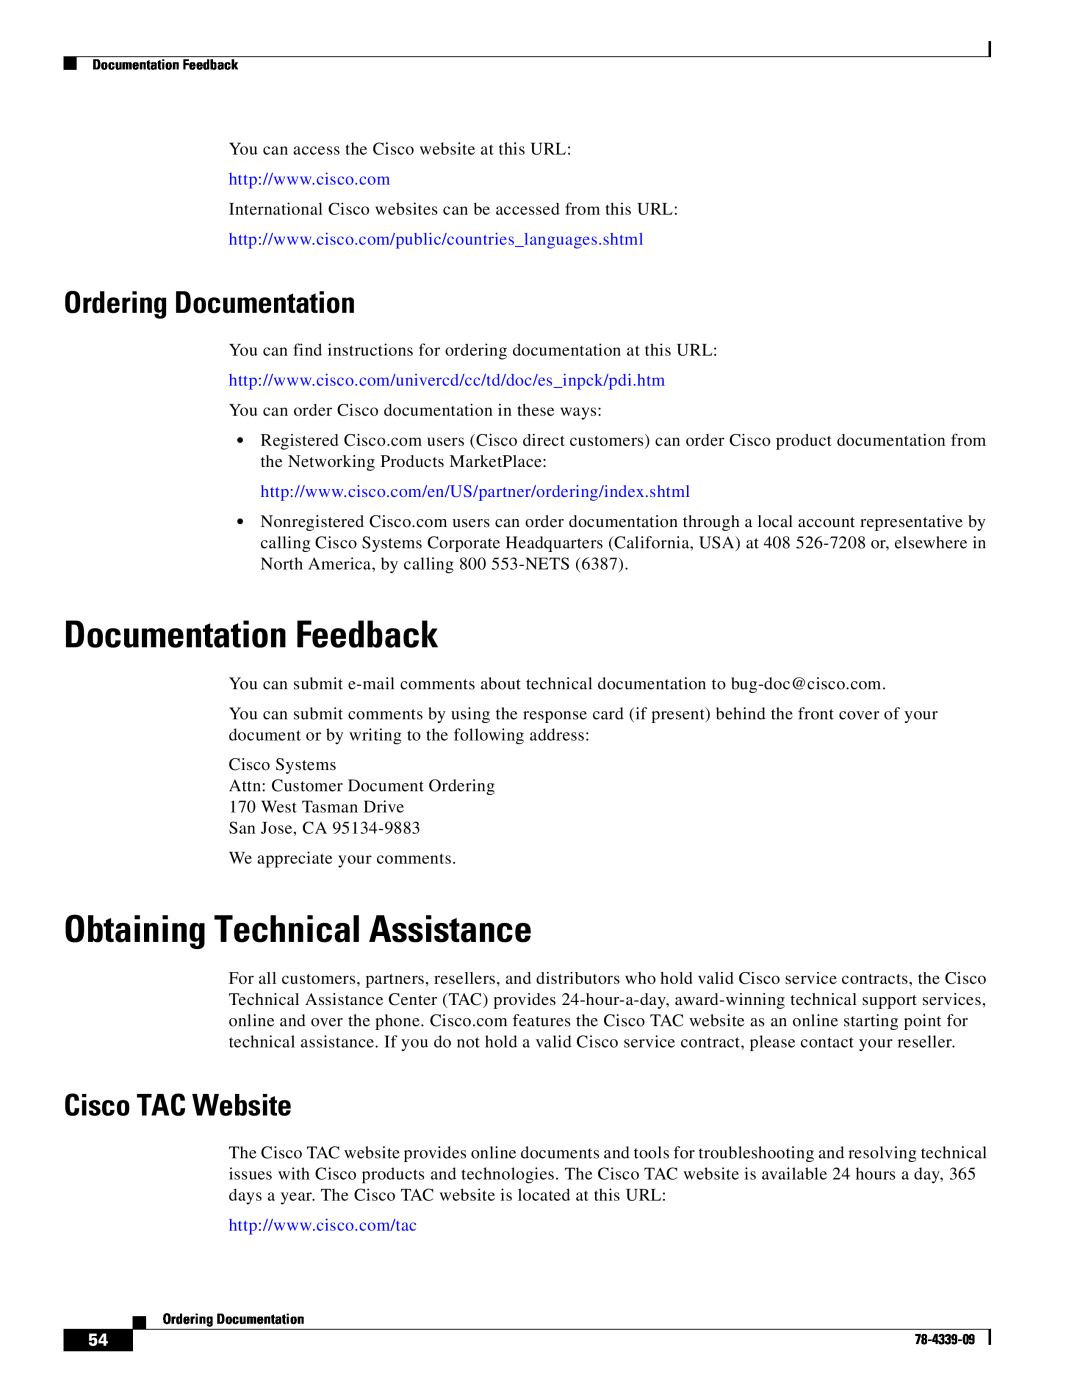 Cisco Systems GRP-B Documentation Feedback, Obtaining Technical Assistance, Ordering Documentation, Cisco TAC Website 